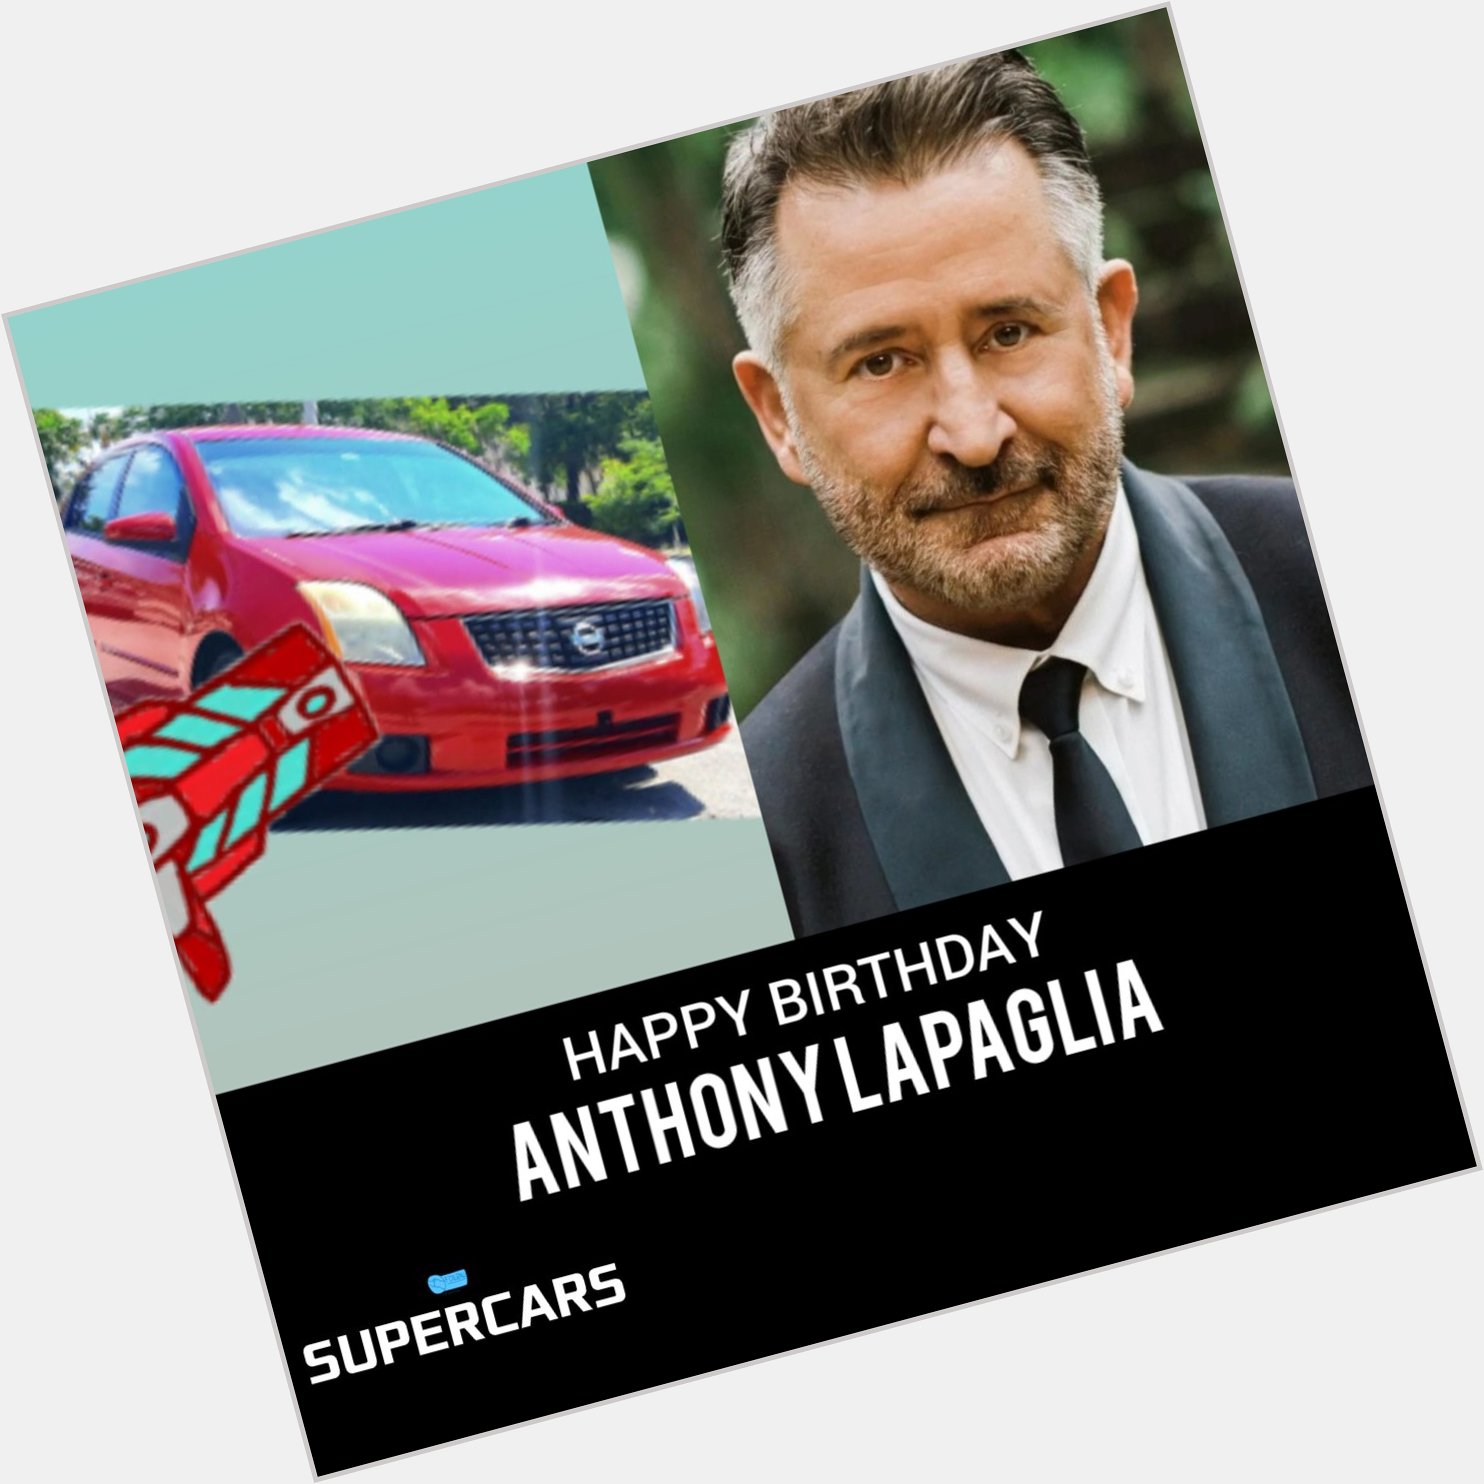 SUPERCARS wish to say Happy Birthday to Anthony LaPaglia .  